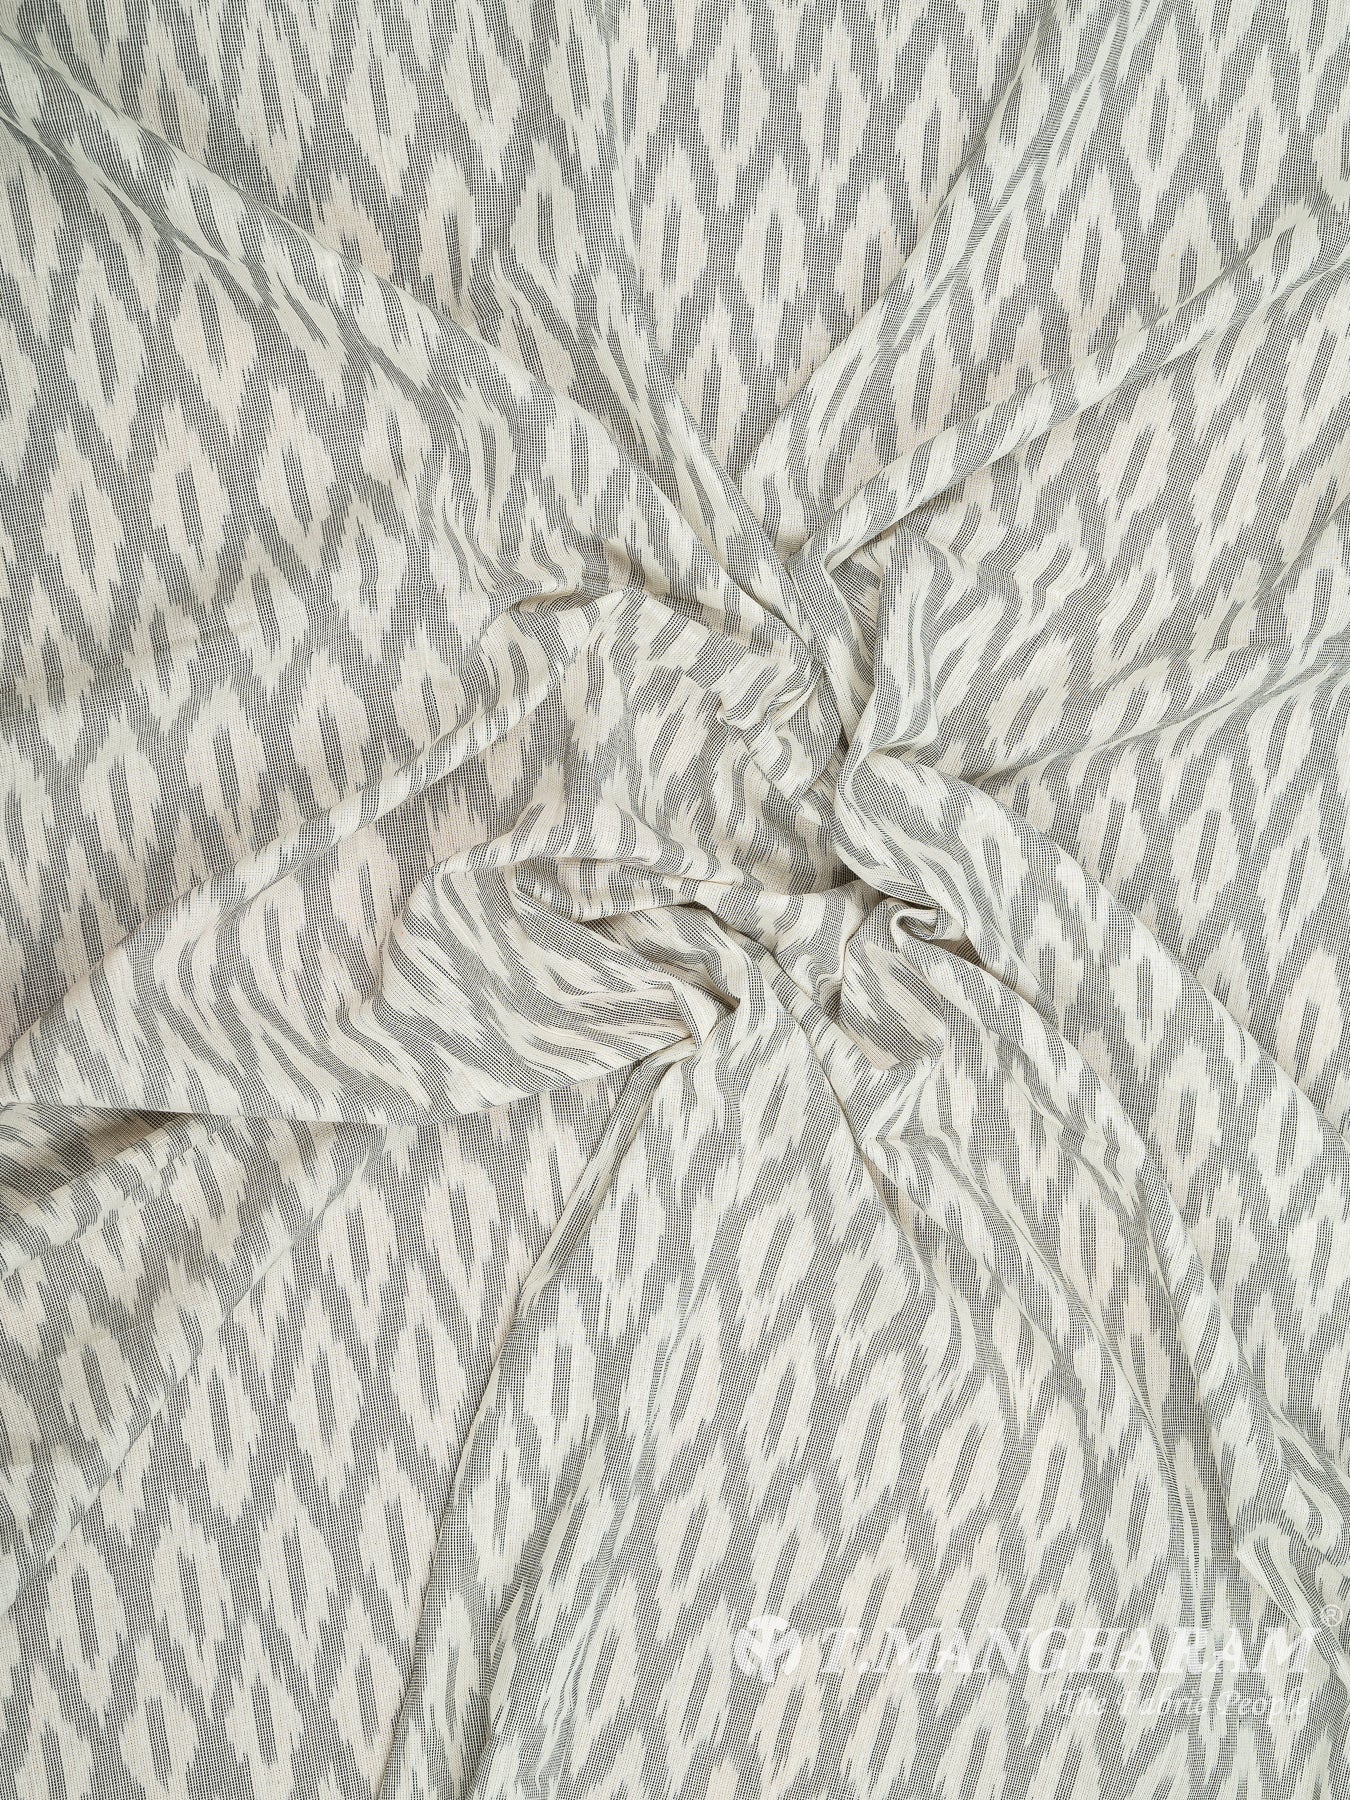 Off White Cotton Ikat Print Fabric - EB5813 view-4